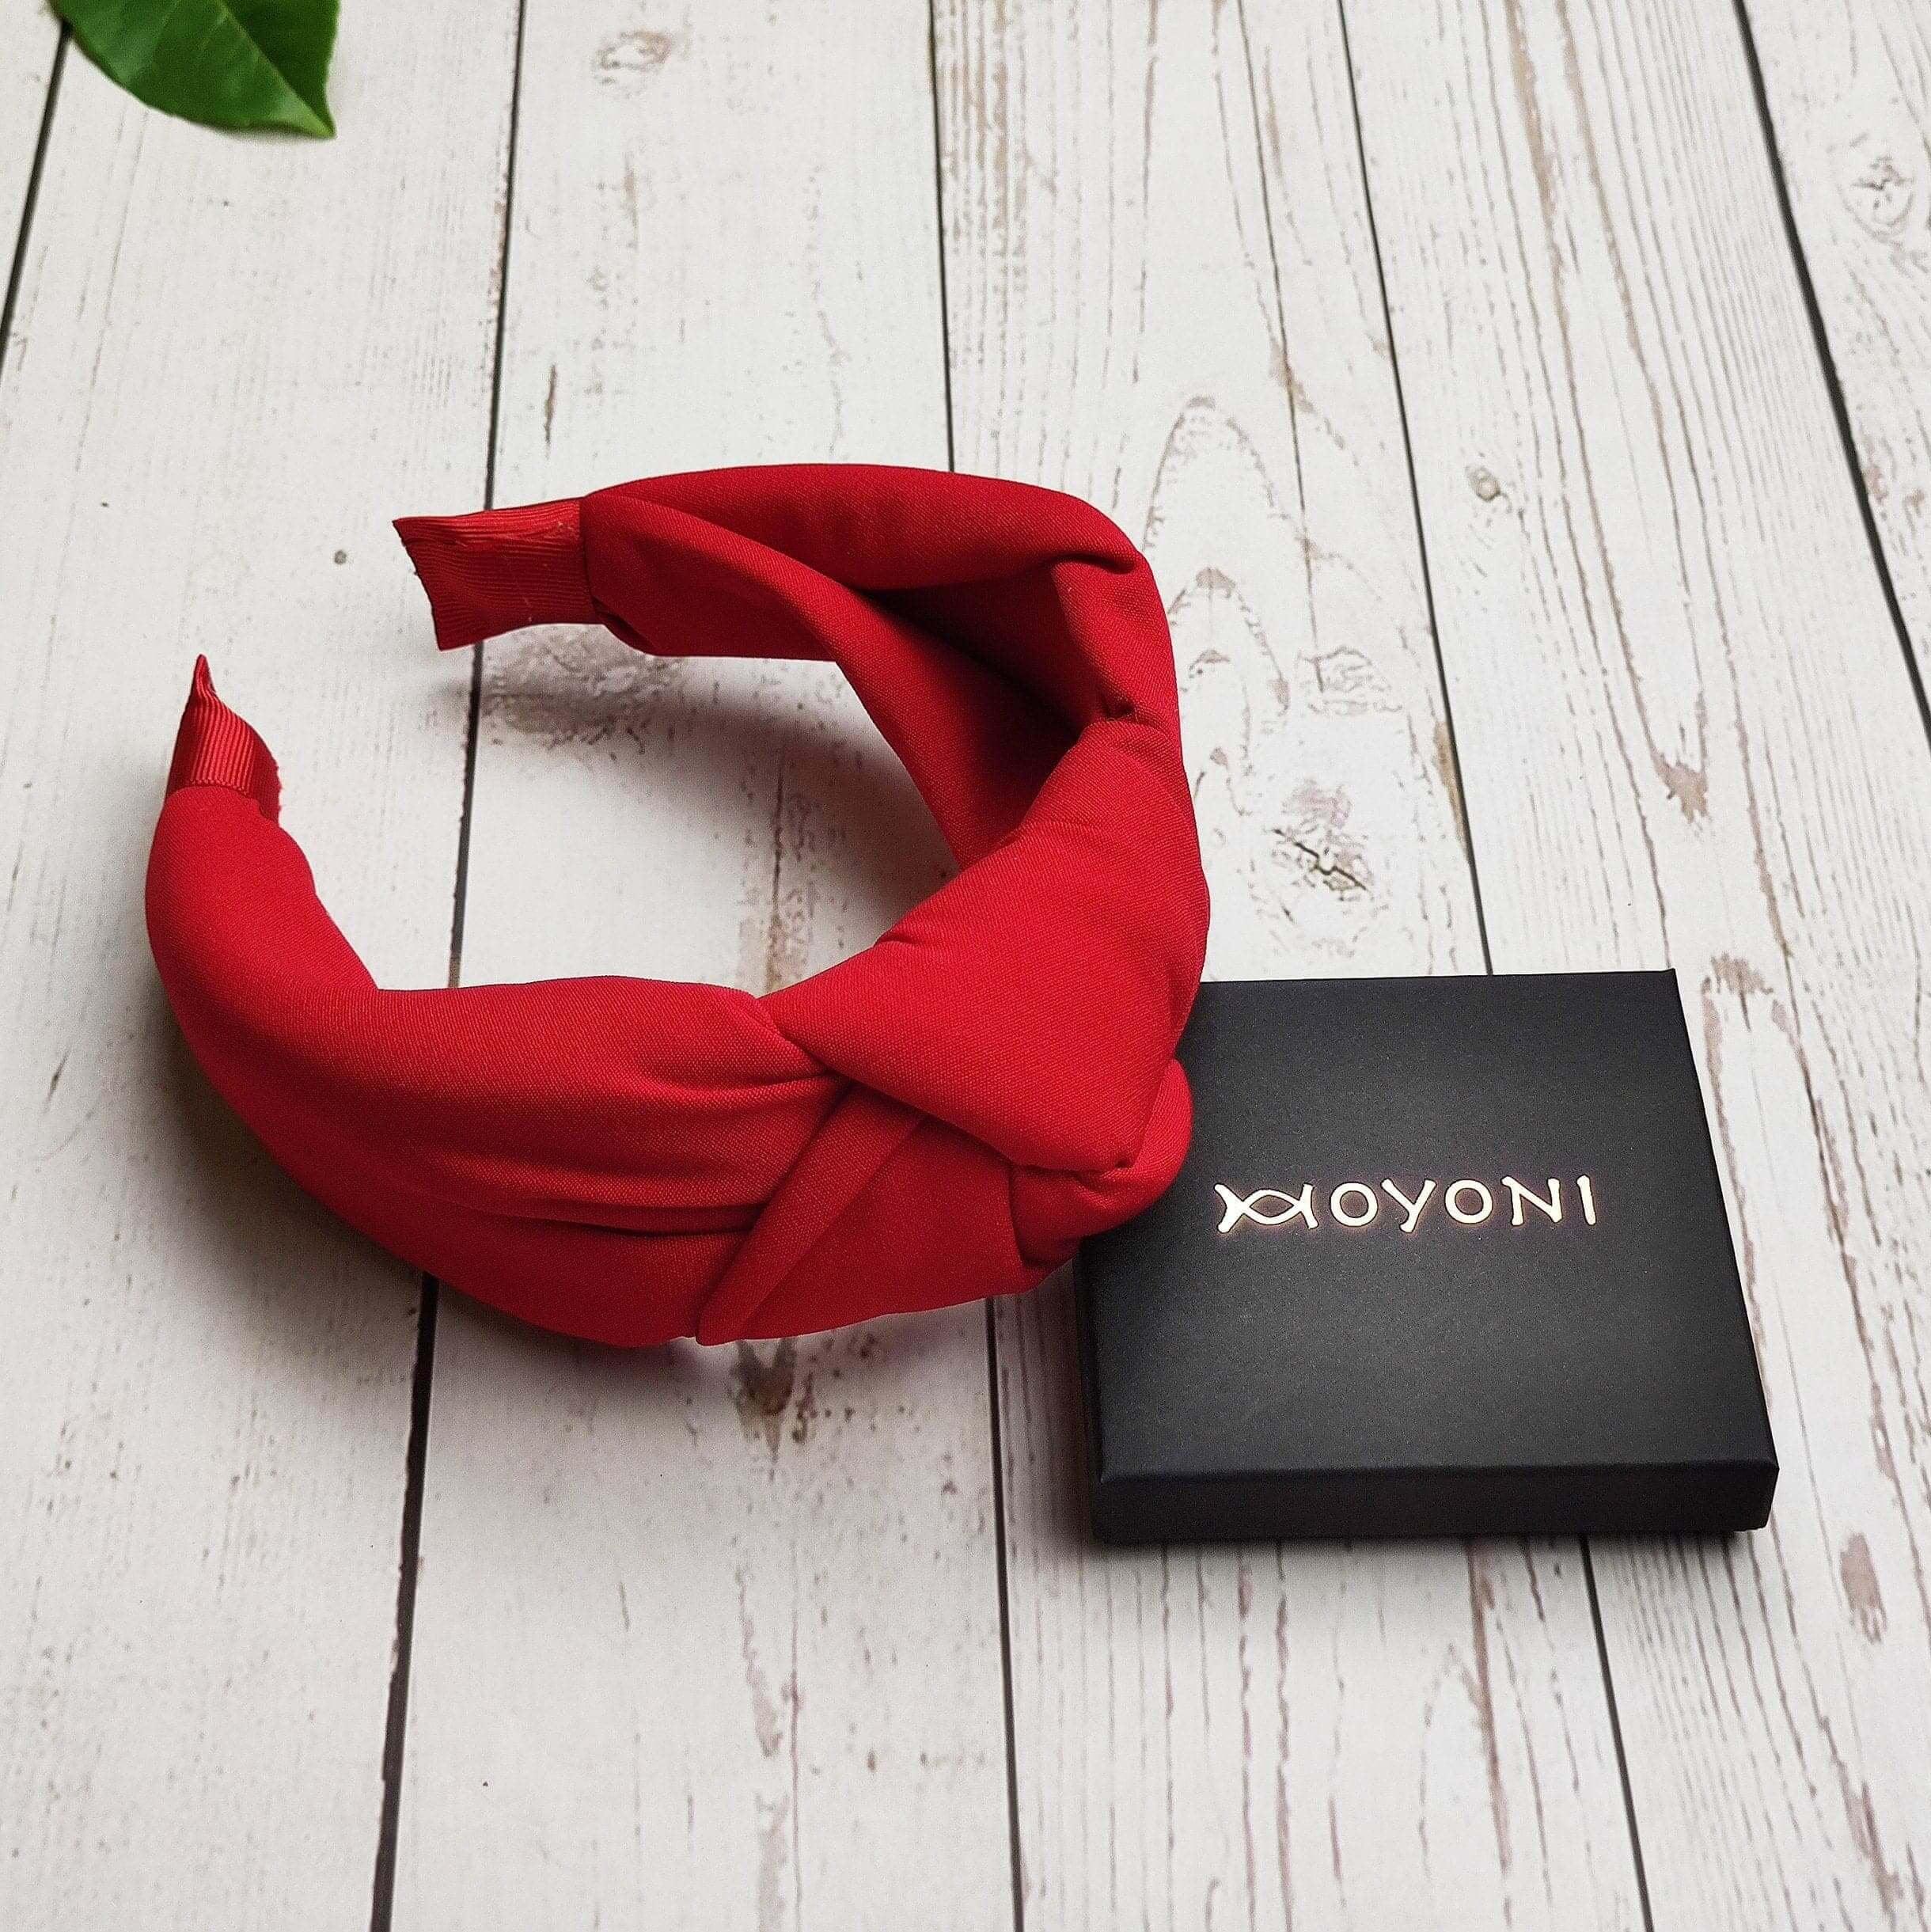 Luxurious Stylish Red Viscose Crepe Headband for Women - Elegant Wide Hairband available at Moyoni Design